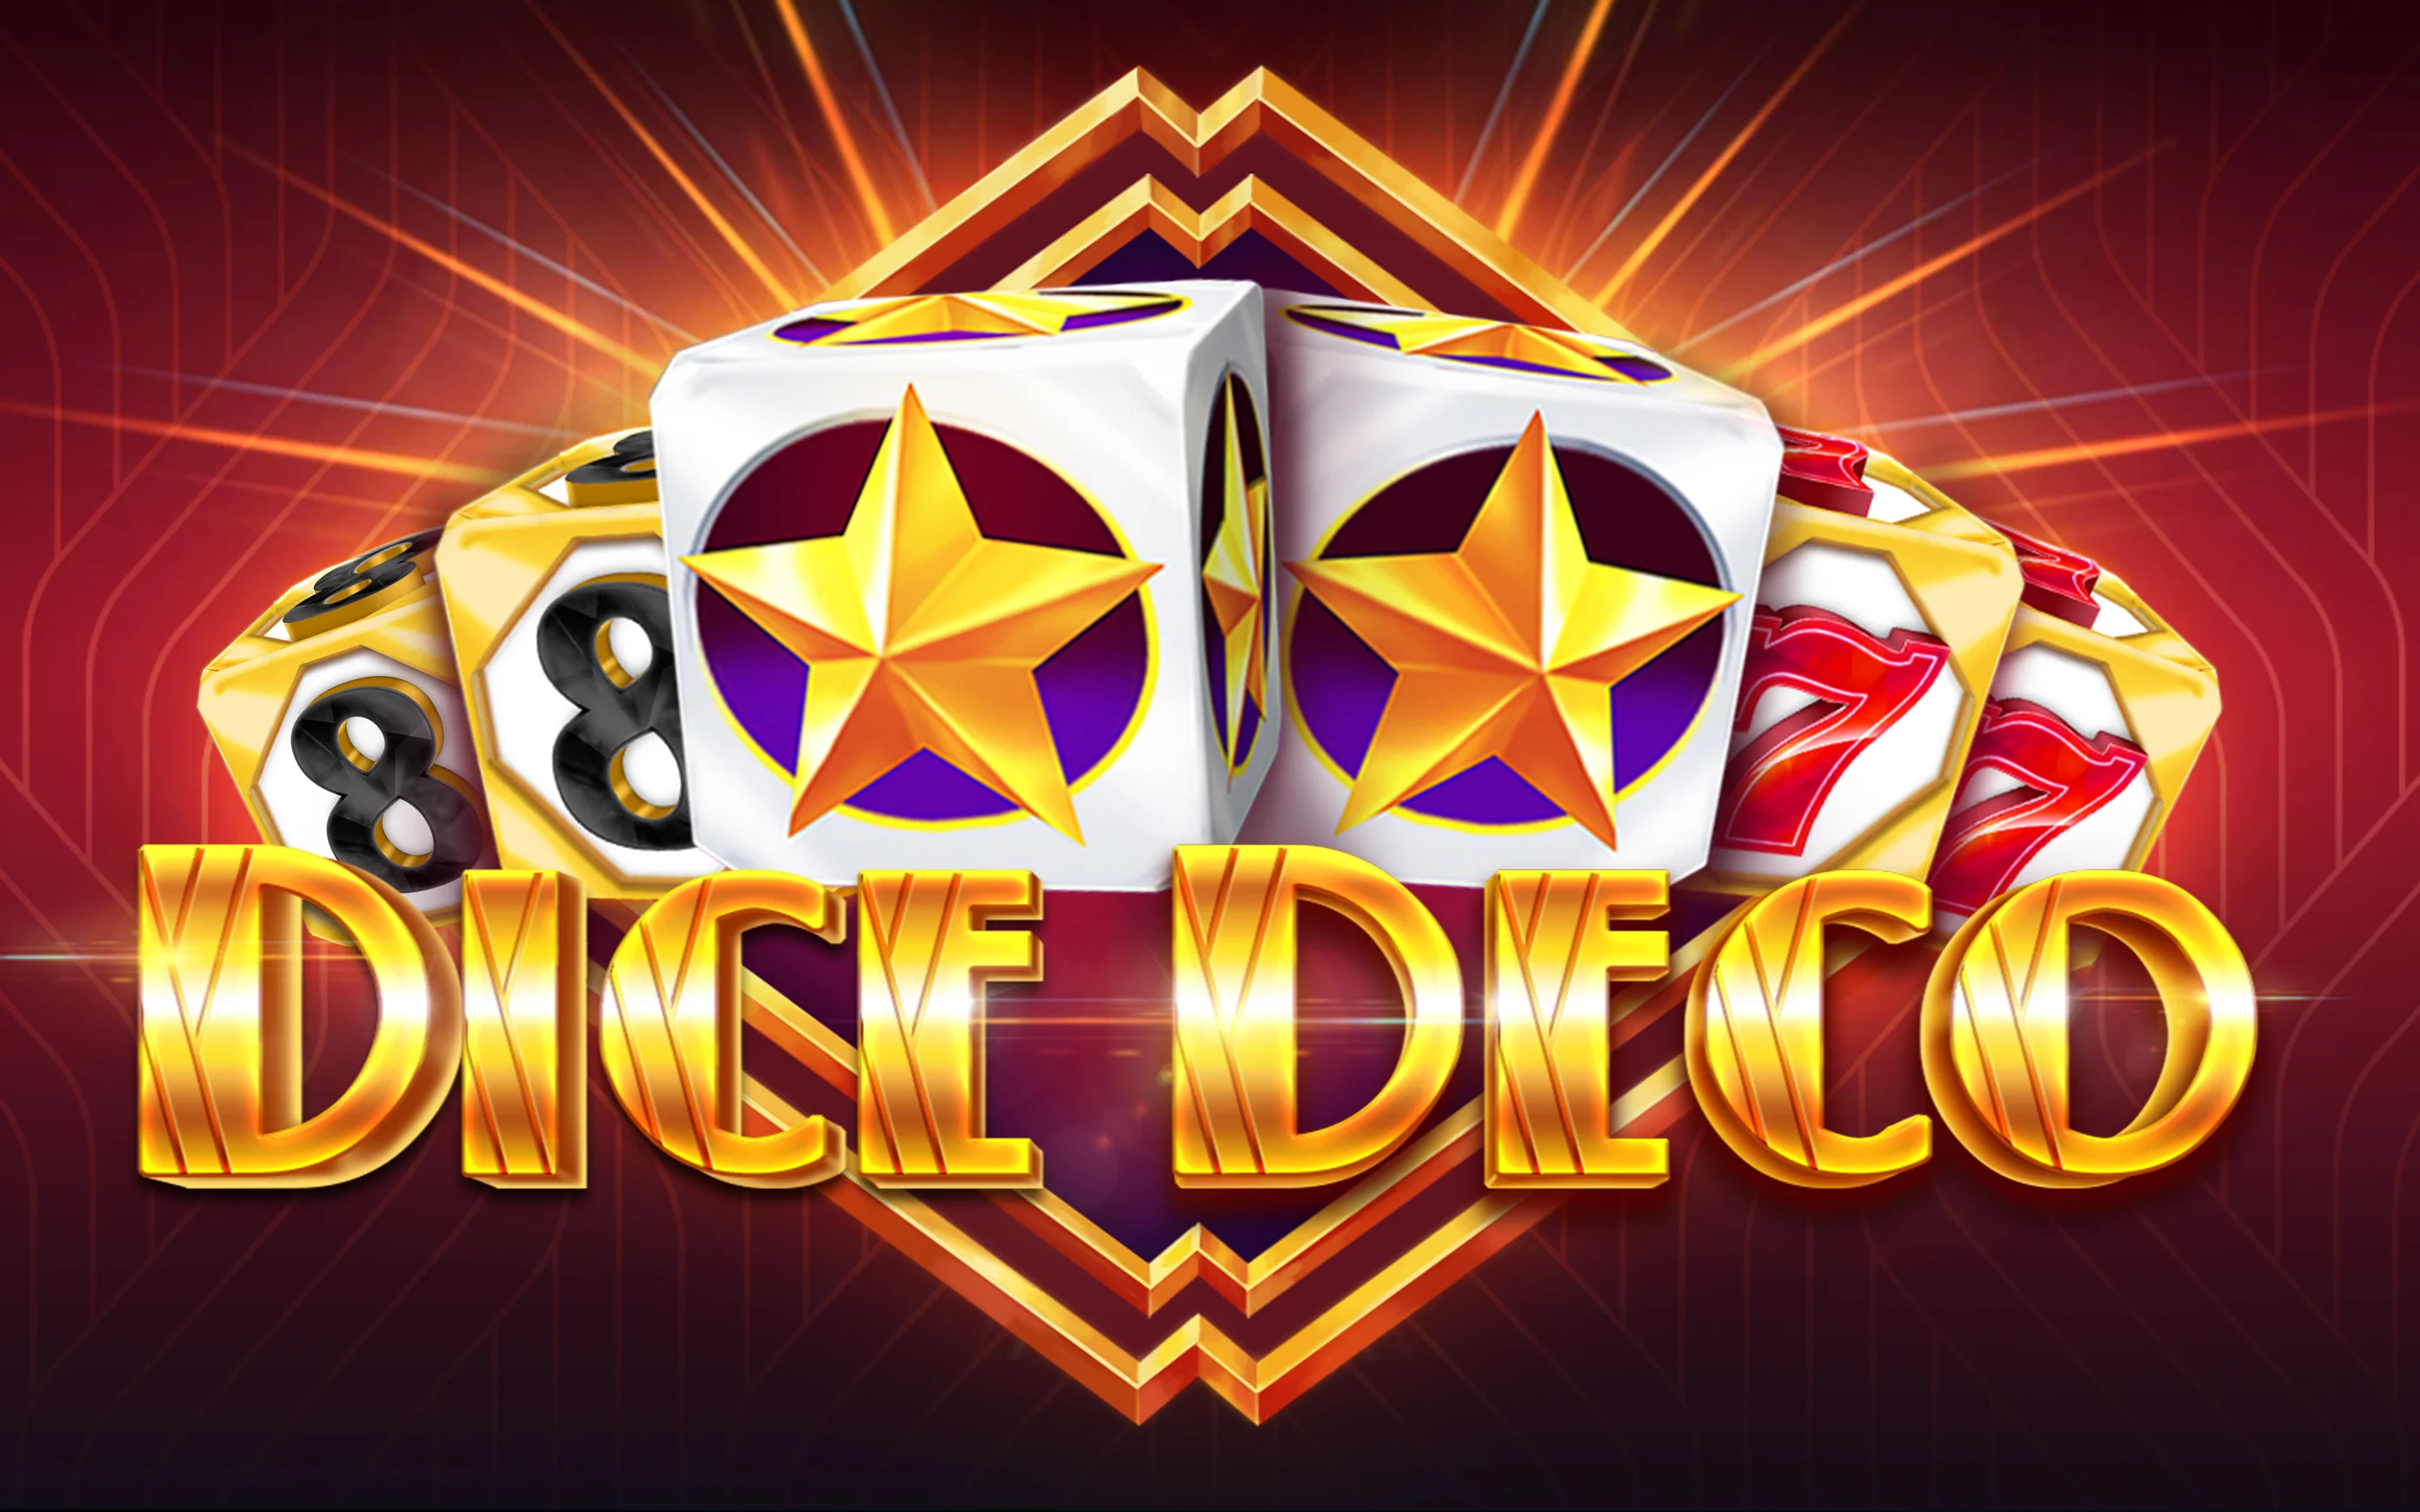 Play Dice Deco on Starcasino.be online casino